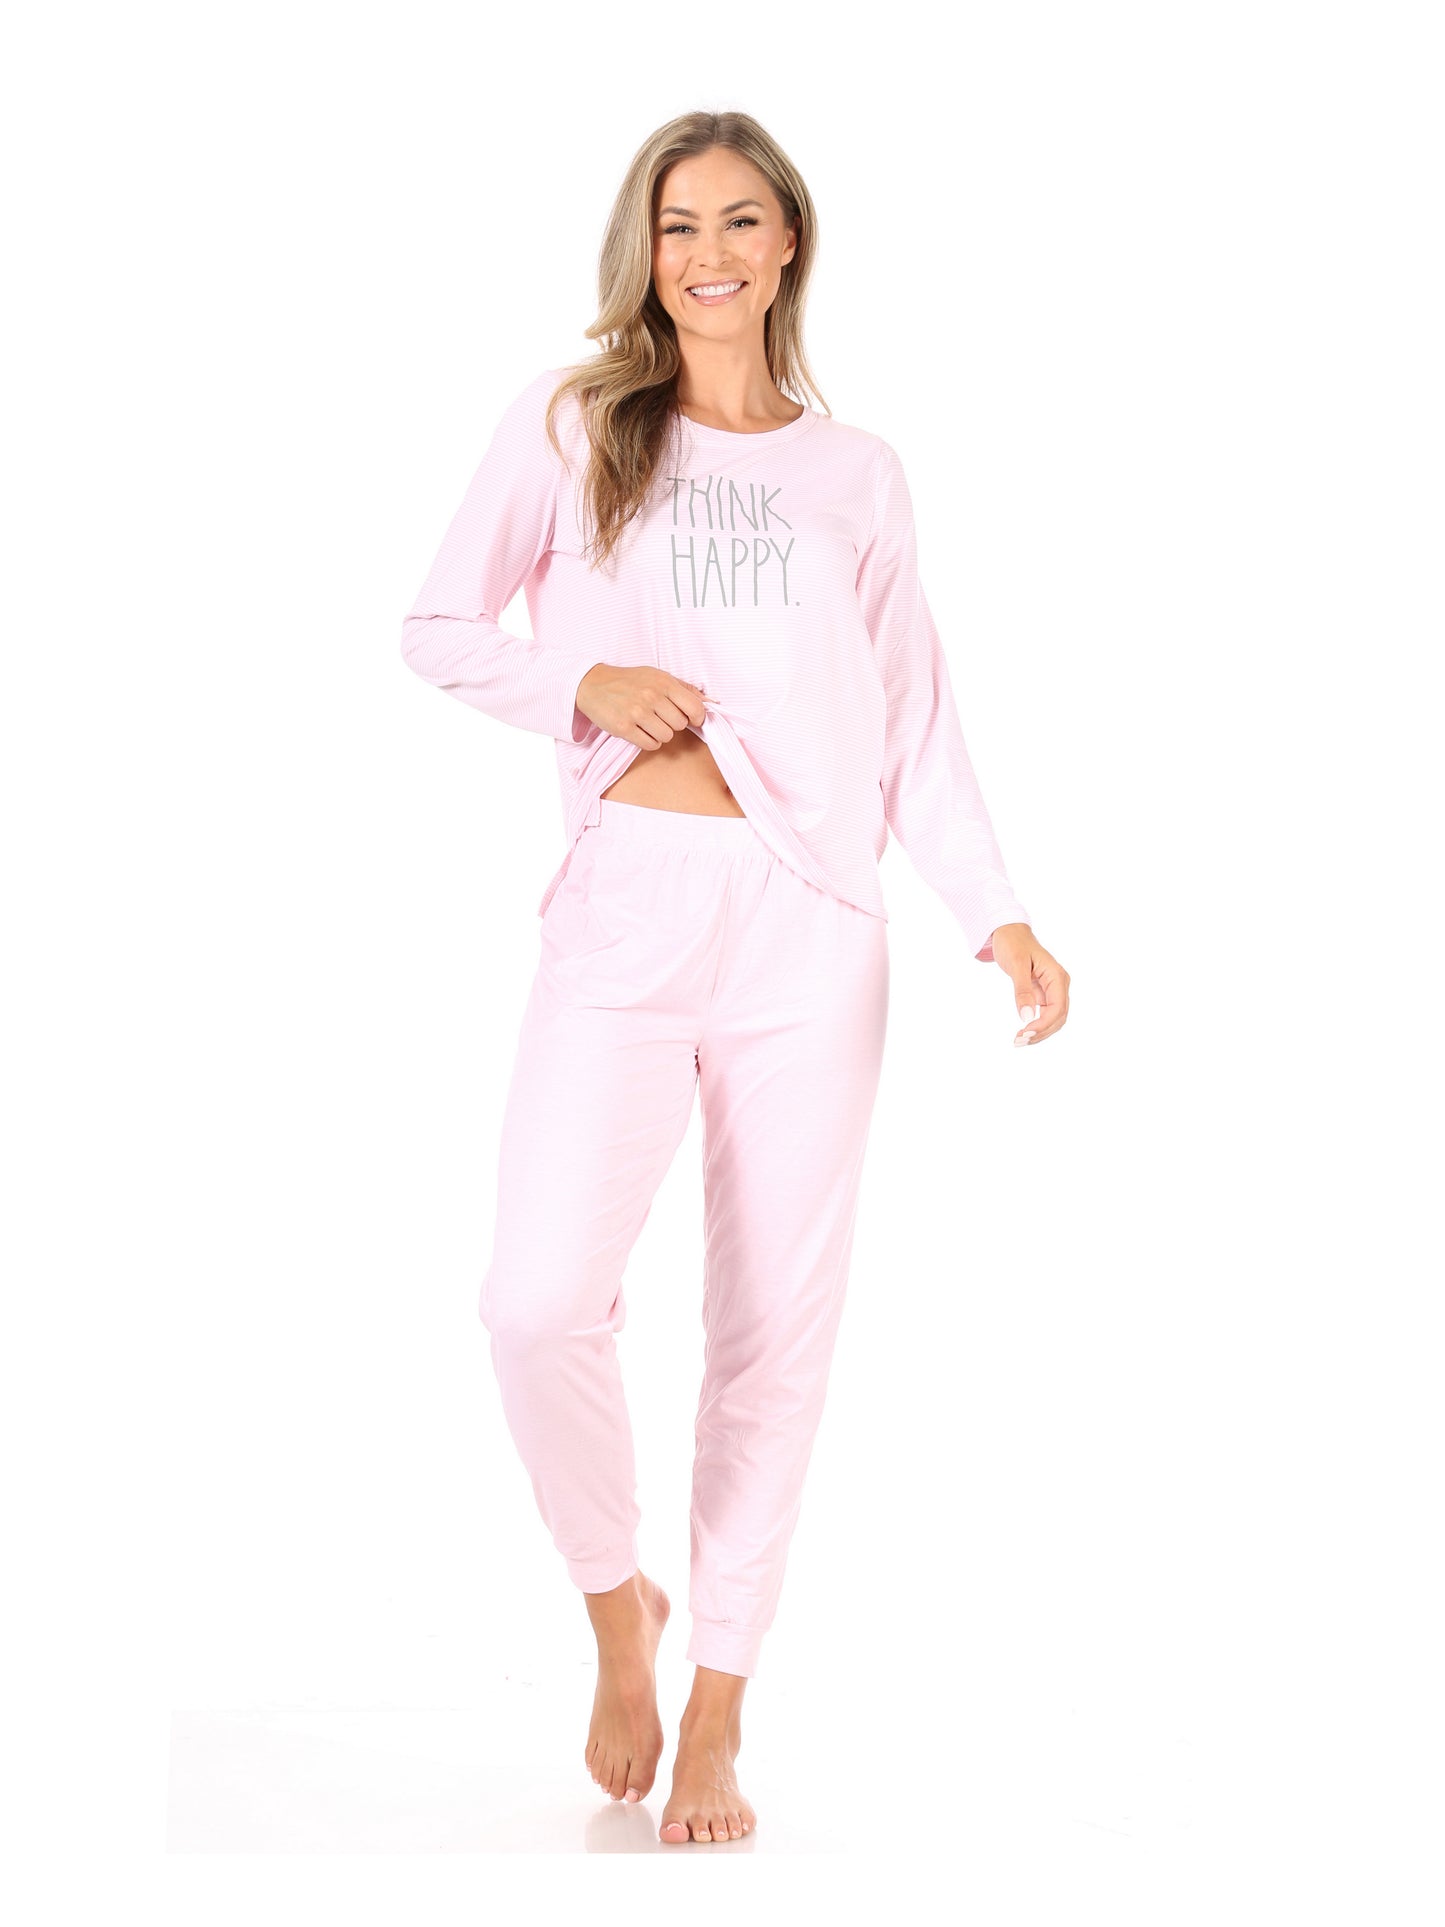 Women's "THINK HAPPY" Long Sleeve Top and Jogger Pajama Set - Rae Dunn Wear - W Pants Set